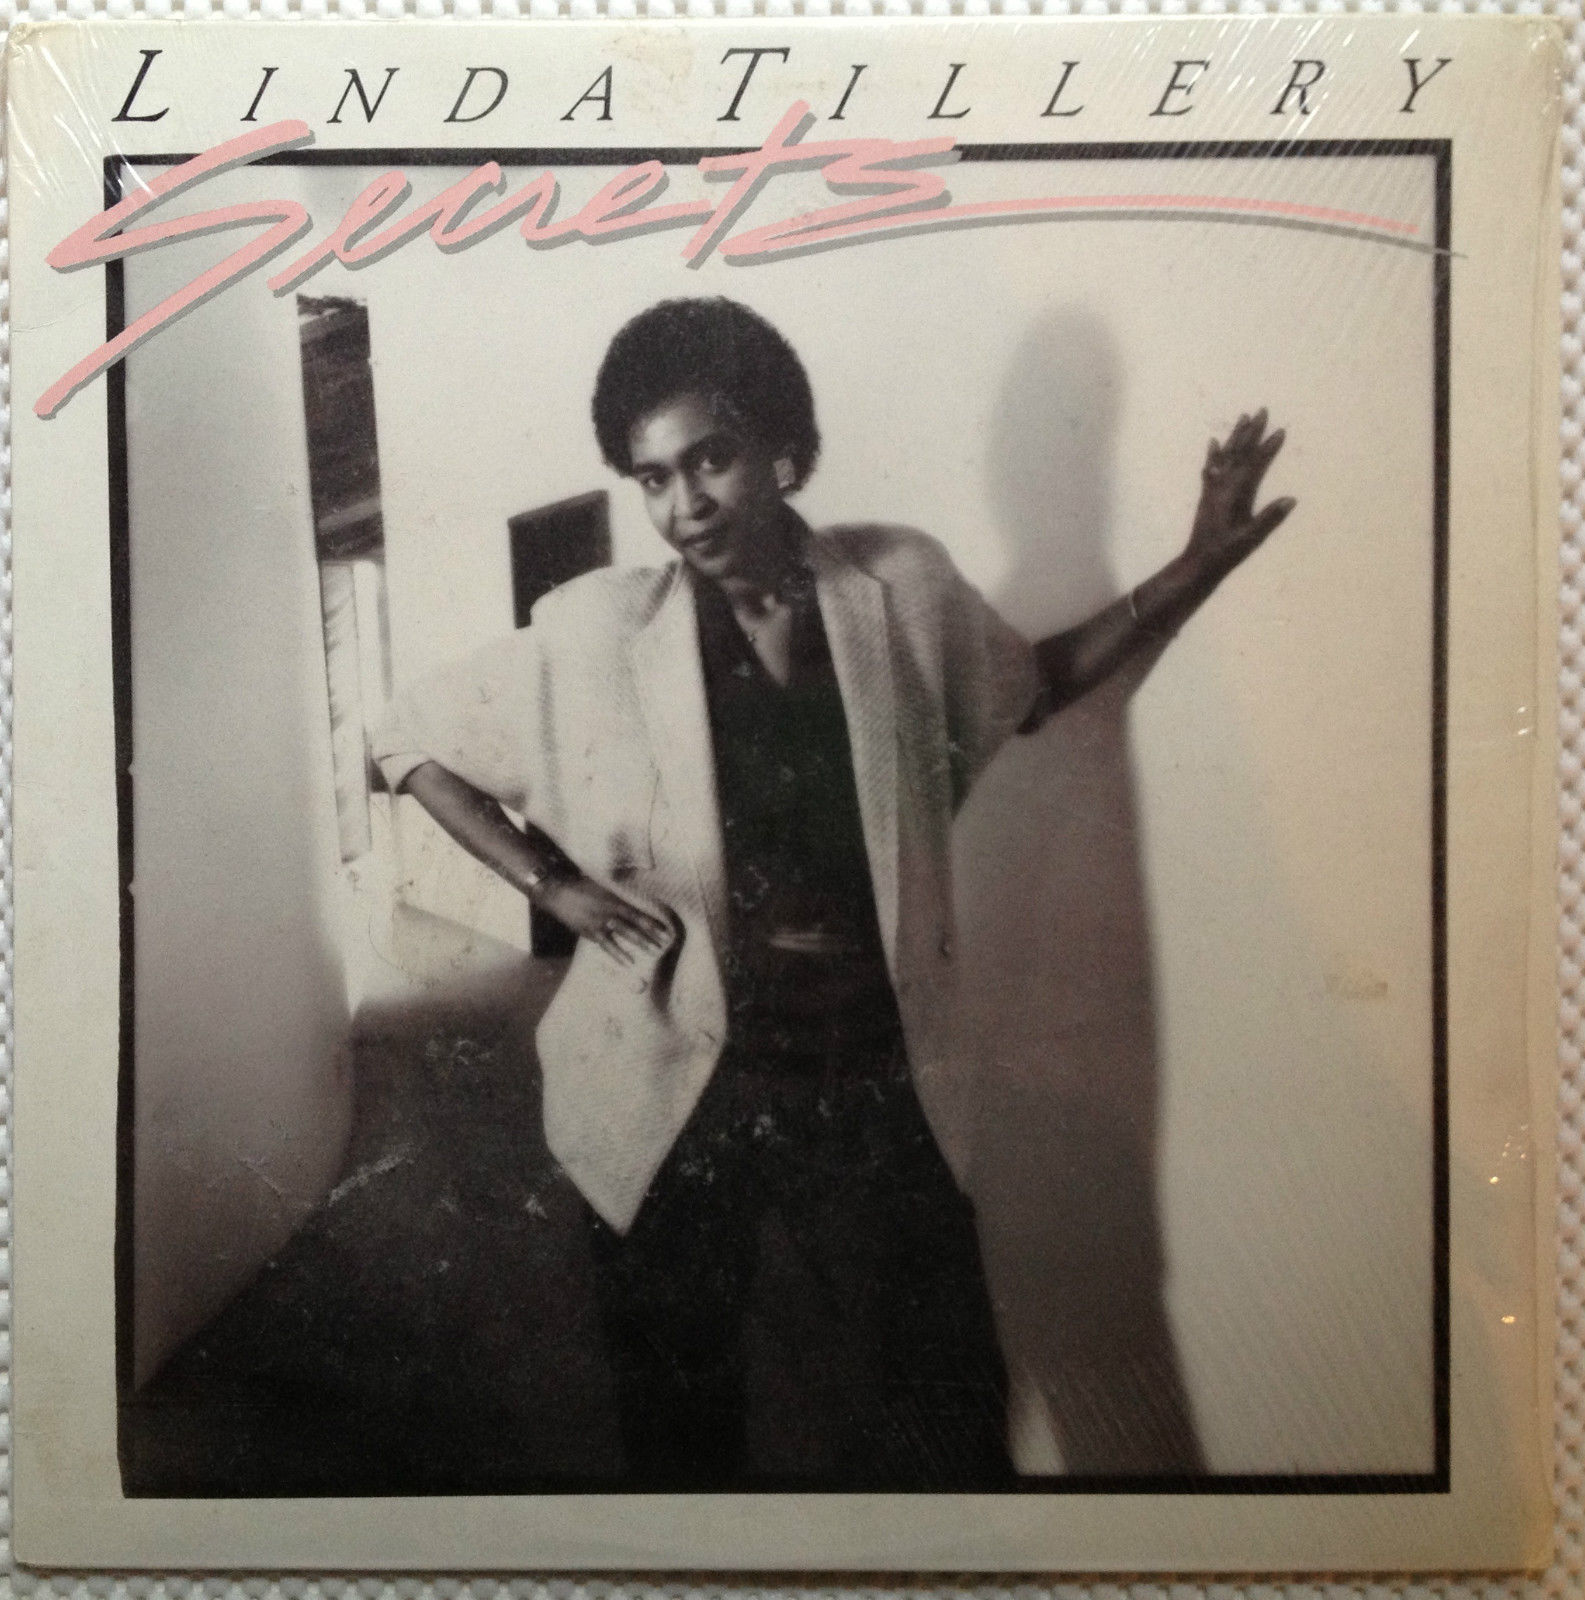 LINDA TILLERY - Secrets cover 